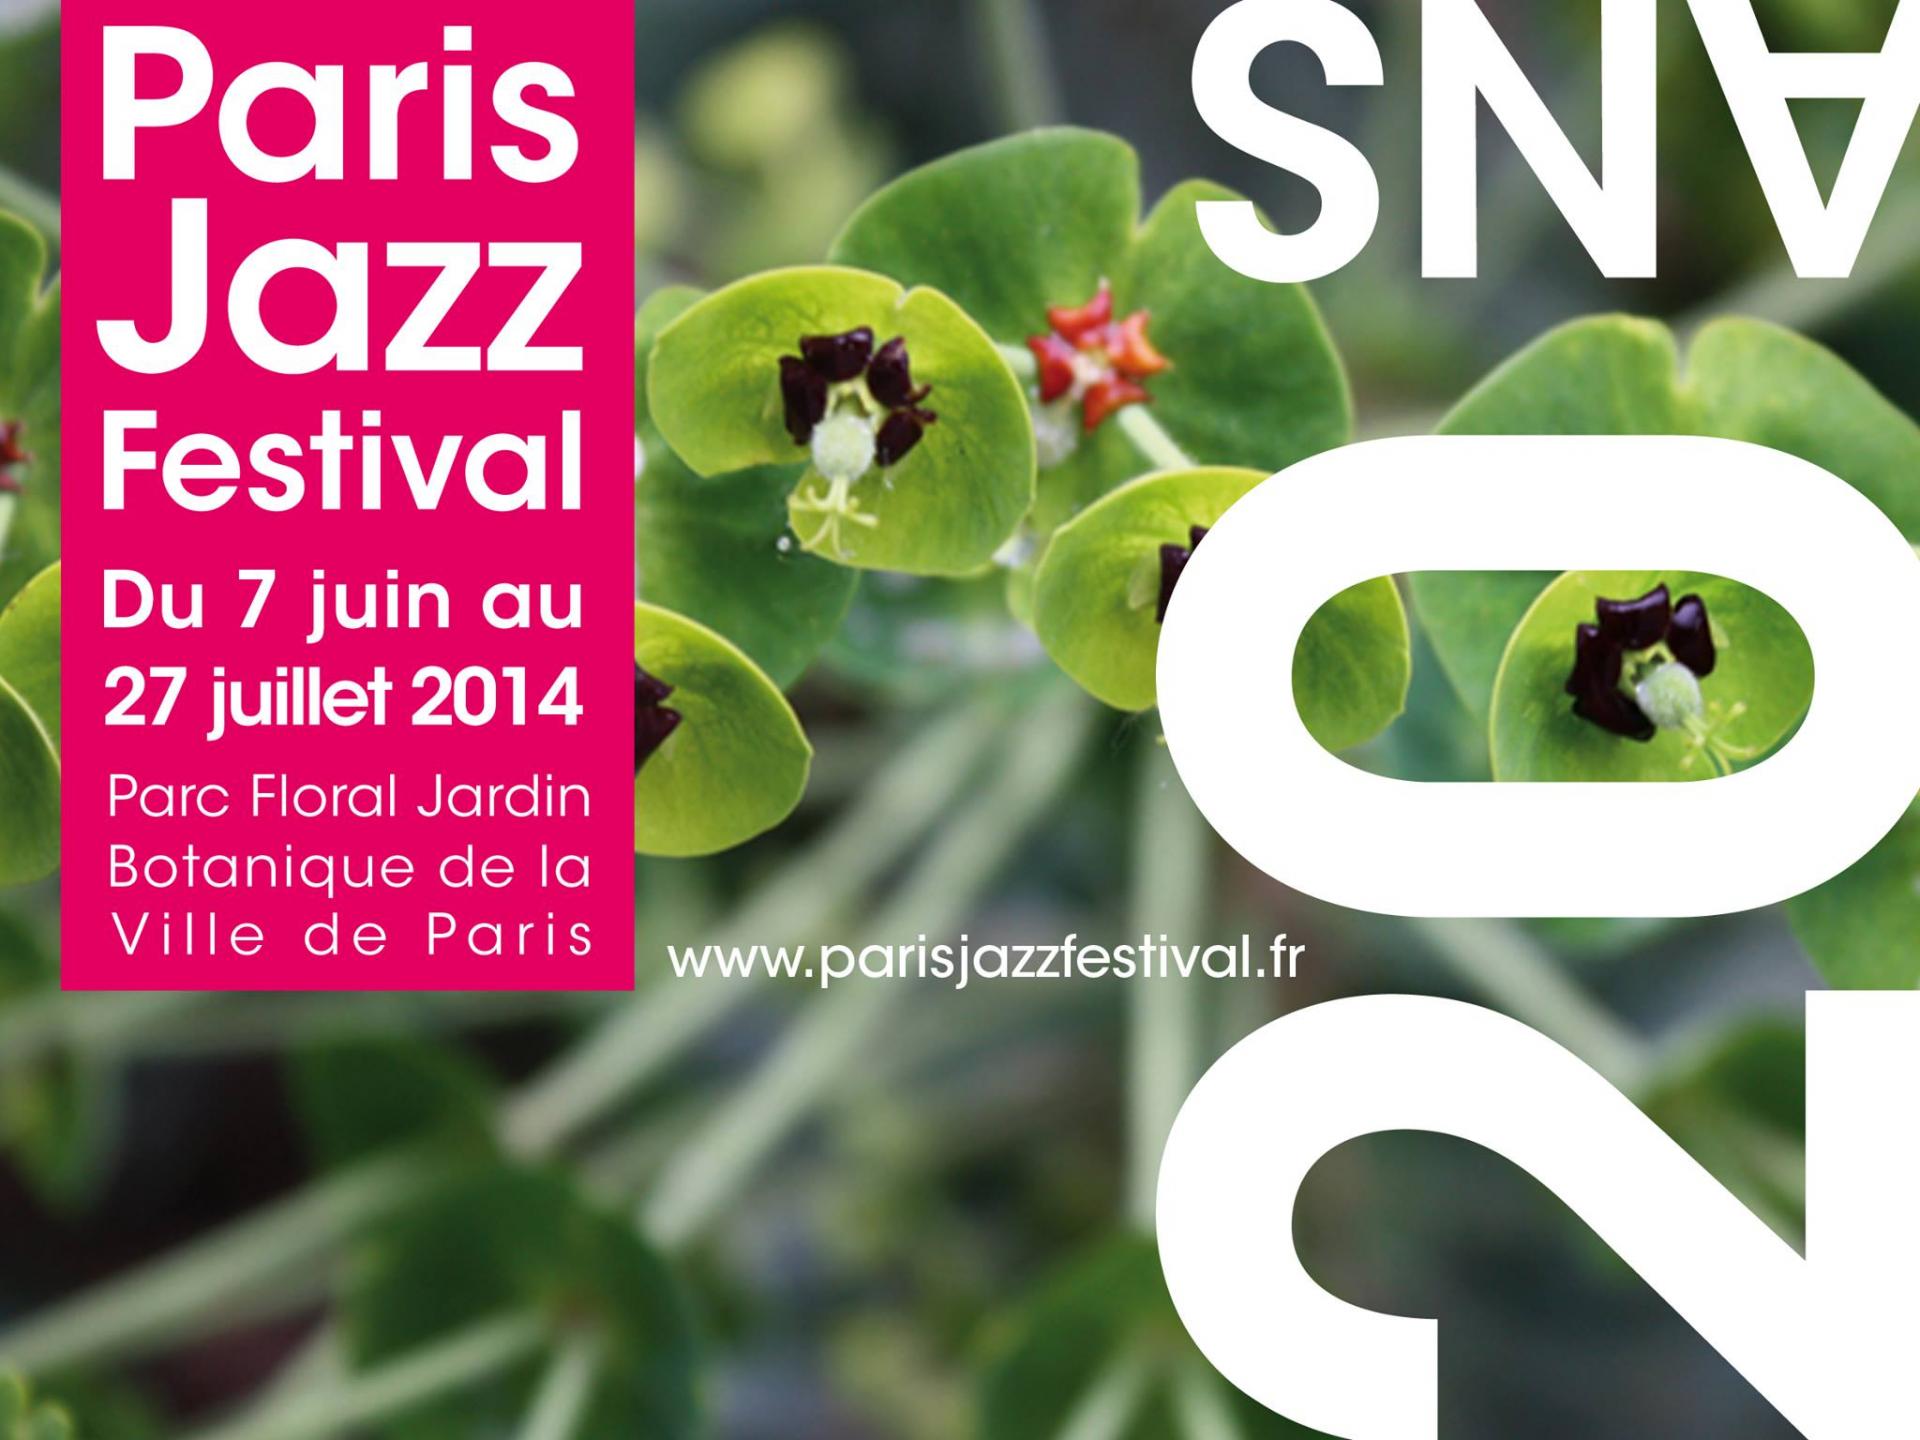 Parisjazzfestival2014